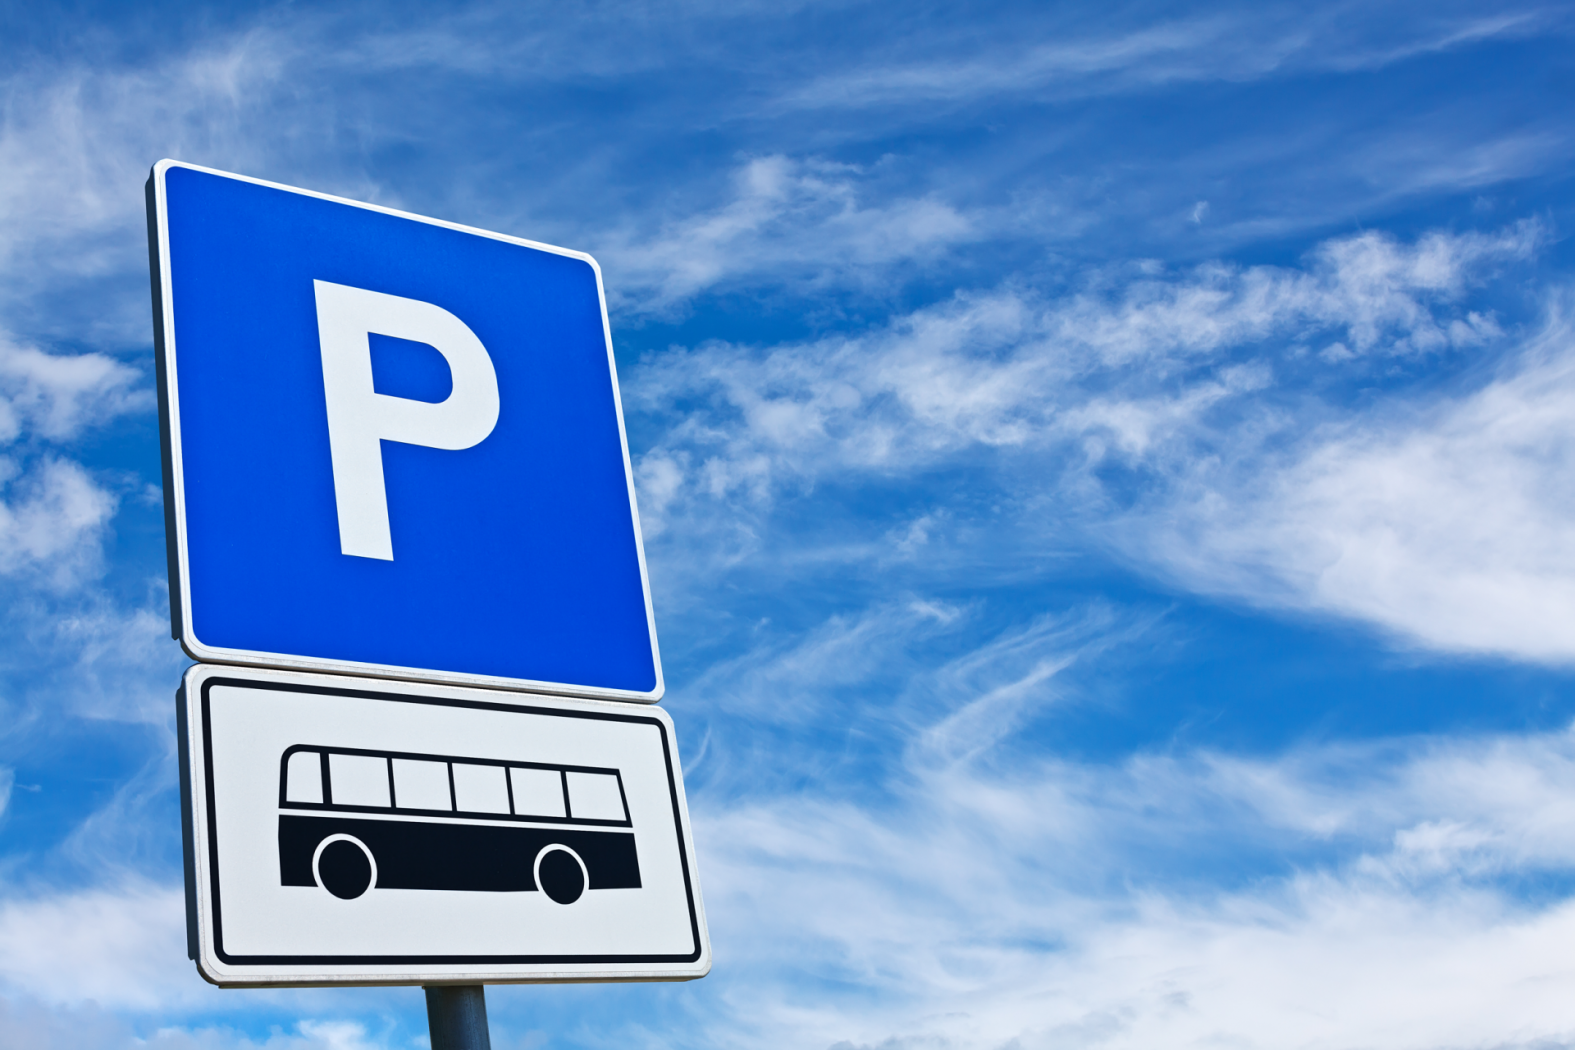 Bus Parking Placeholder Shutterstock